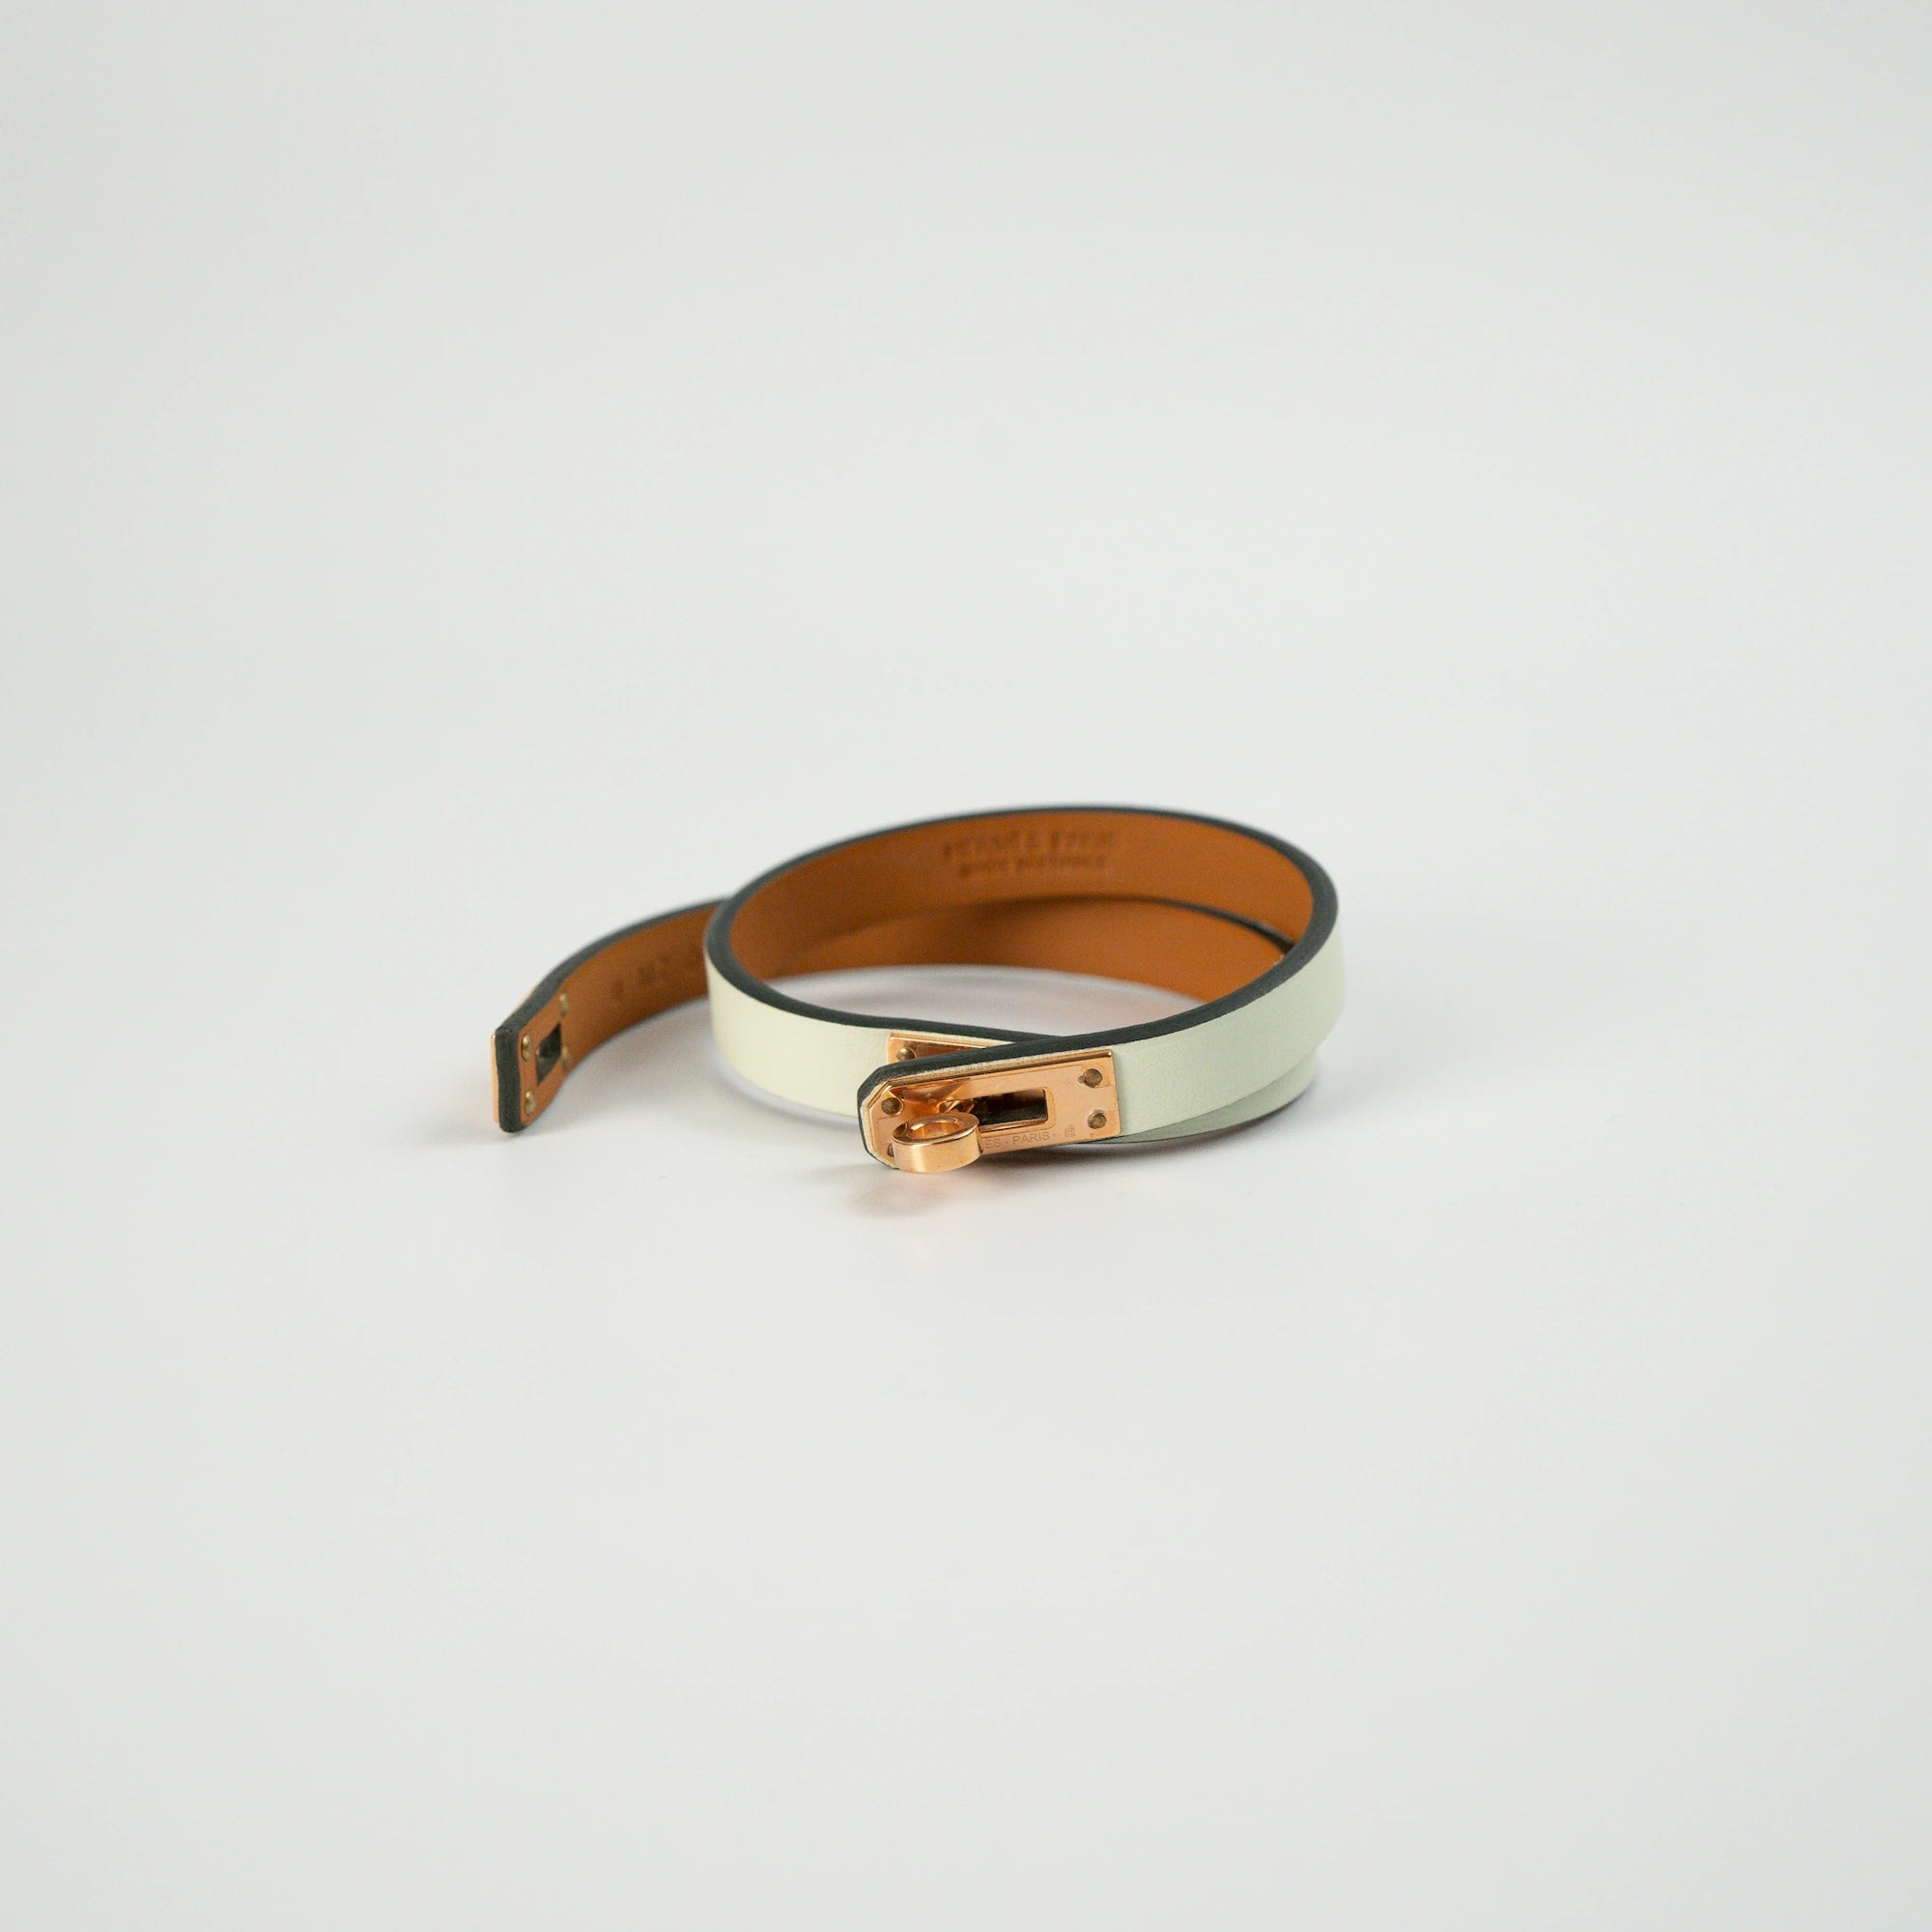 Türkises Leder-Armband "Mini Kelly Double Tour" von Hermès mit rosegoldenem Verschluss (geöffnet)